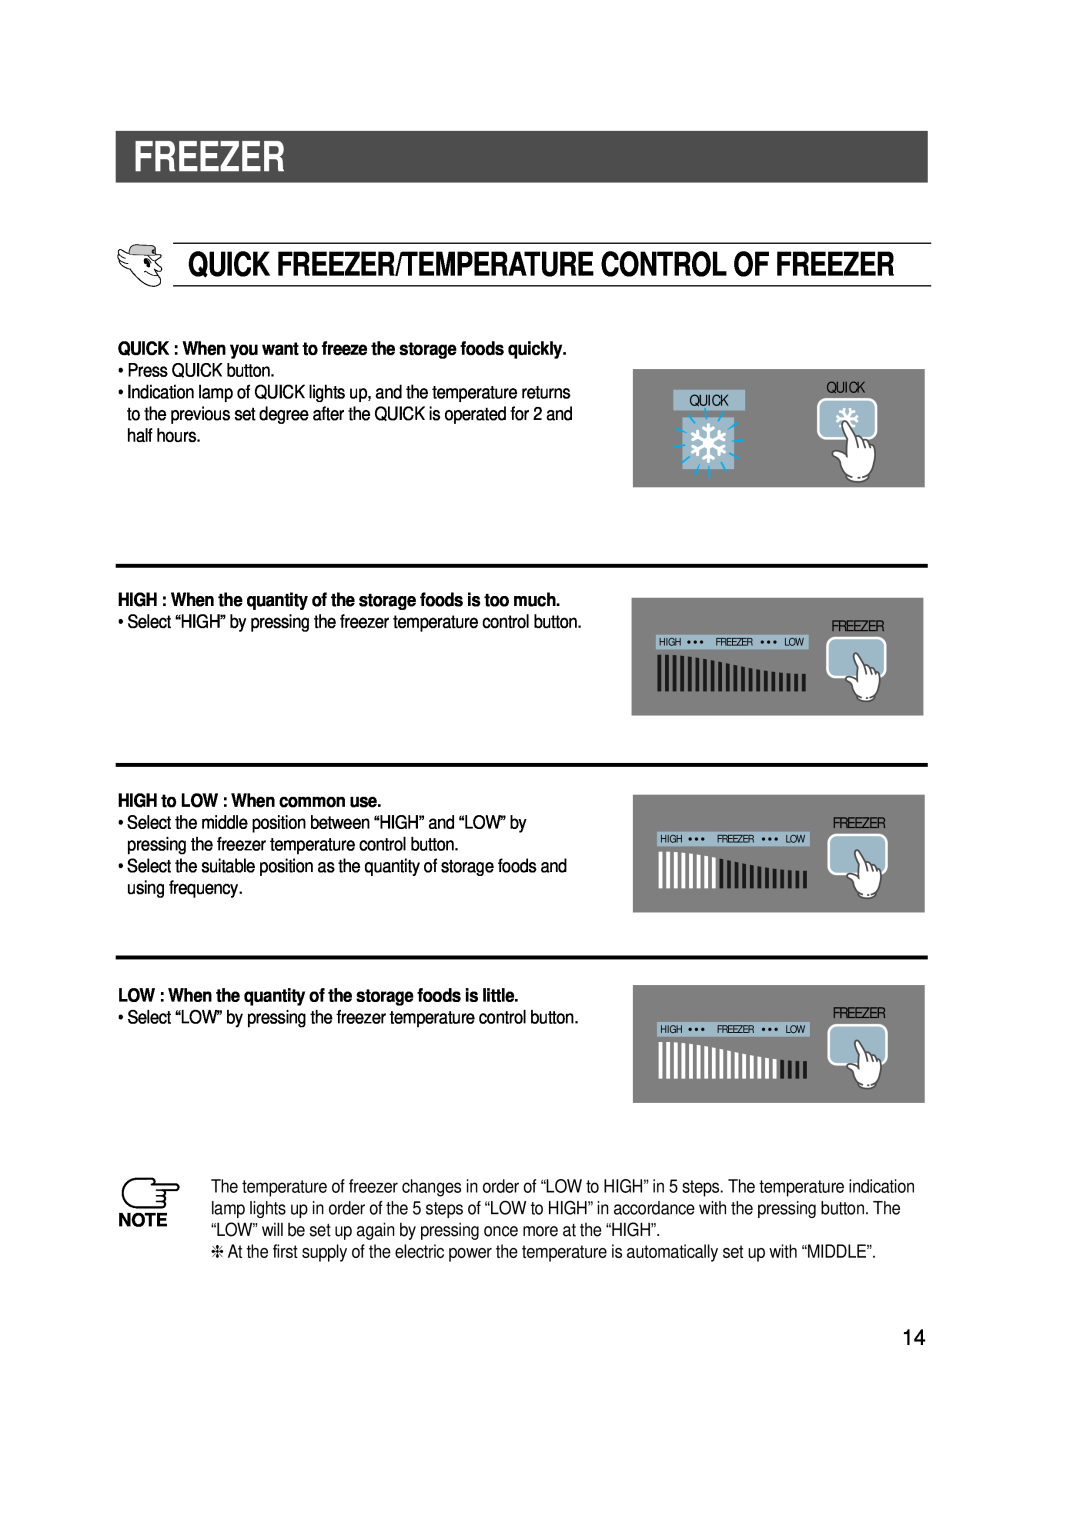 Samsung SR-L676EV, SR-L626EV, SR-L628EV manual Quick Freezer/Temperature Control Of Freezer, HIGH to LOW When common use 